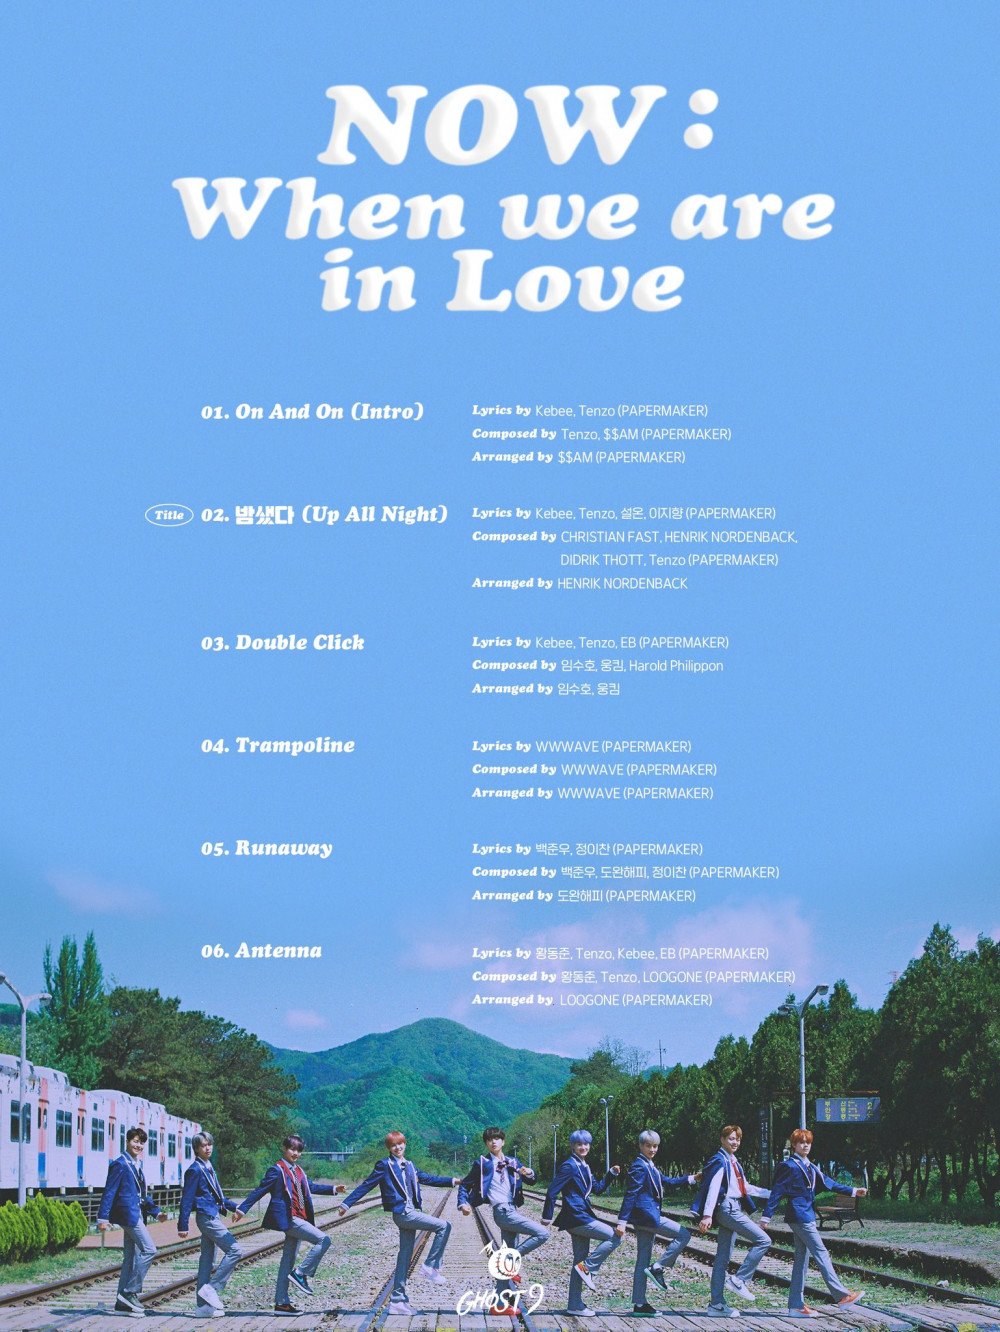 [Камбэк] Ghost9 альбом "Now: When we are in Love": музыкальный клип "Up All Night"